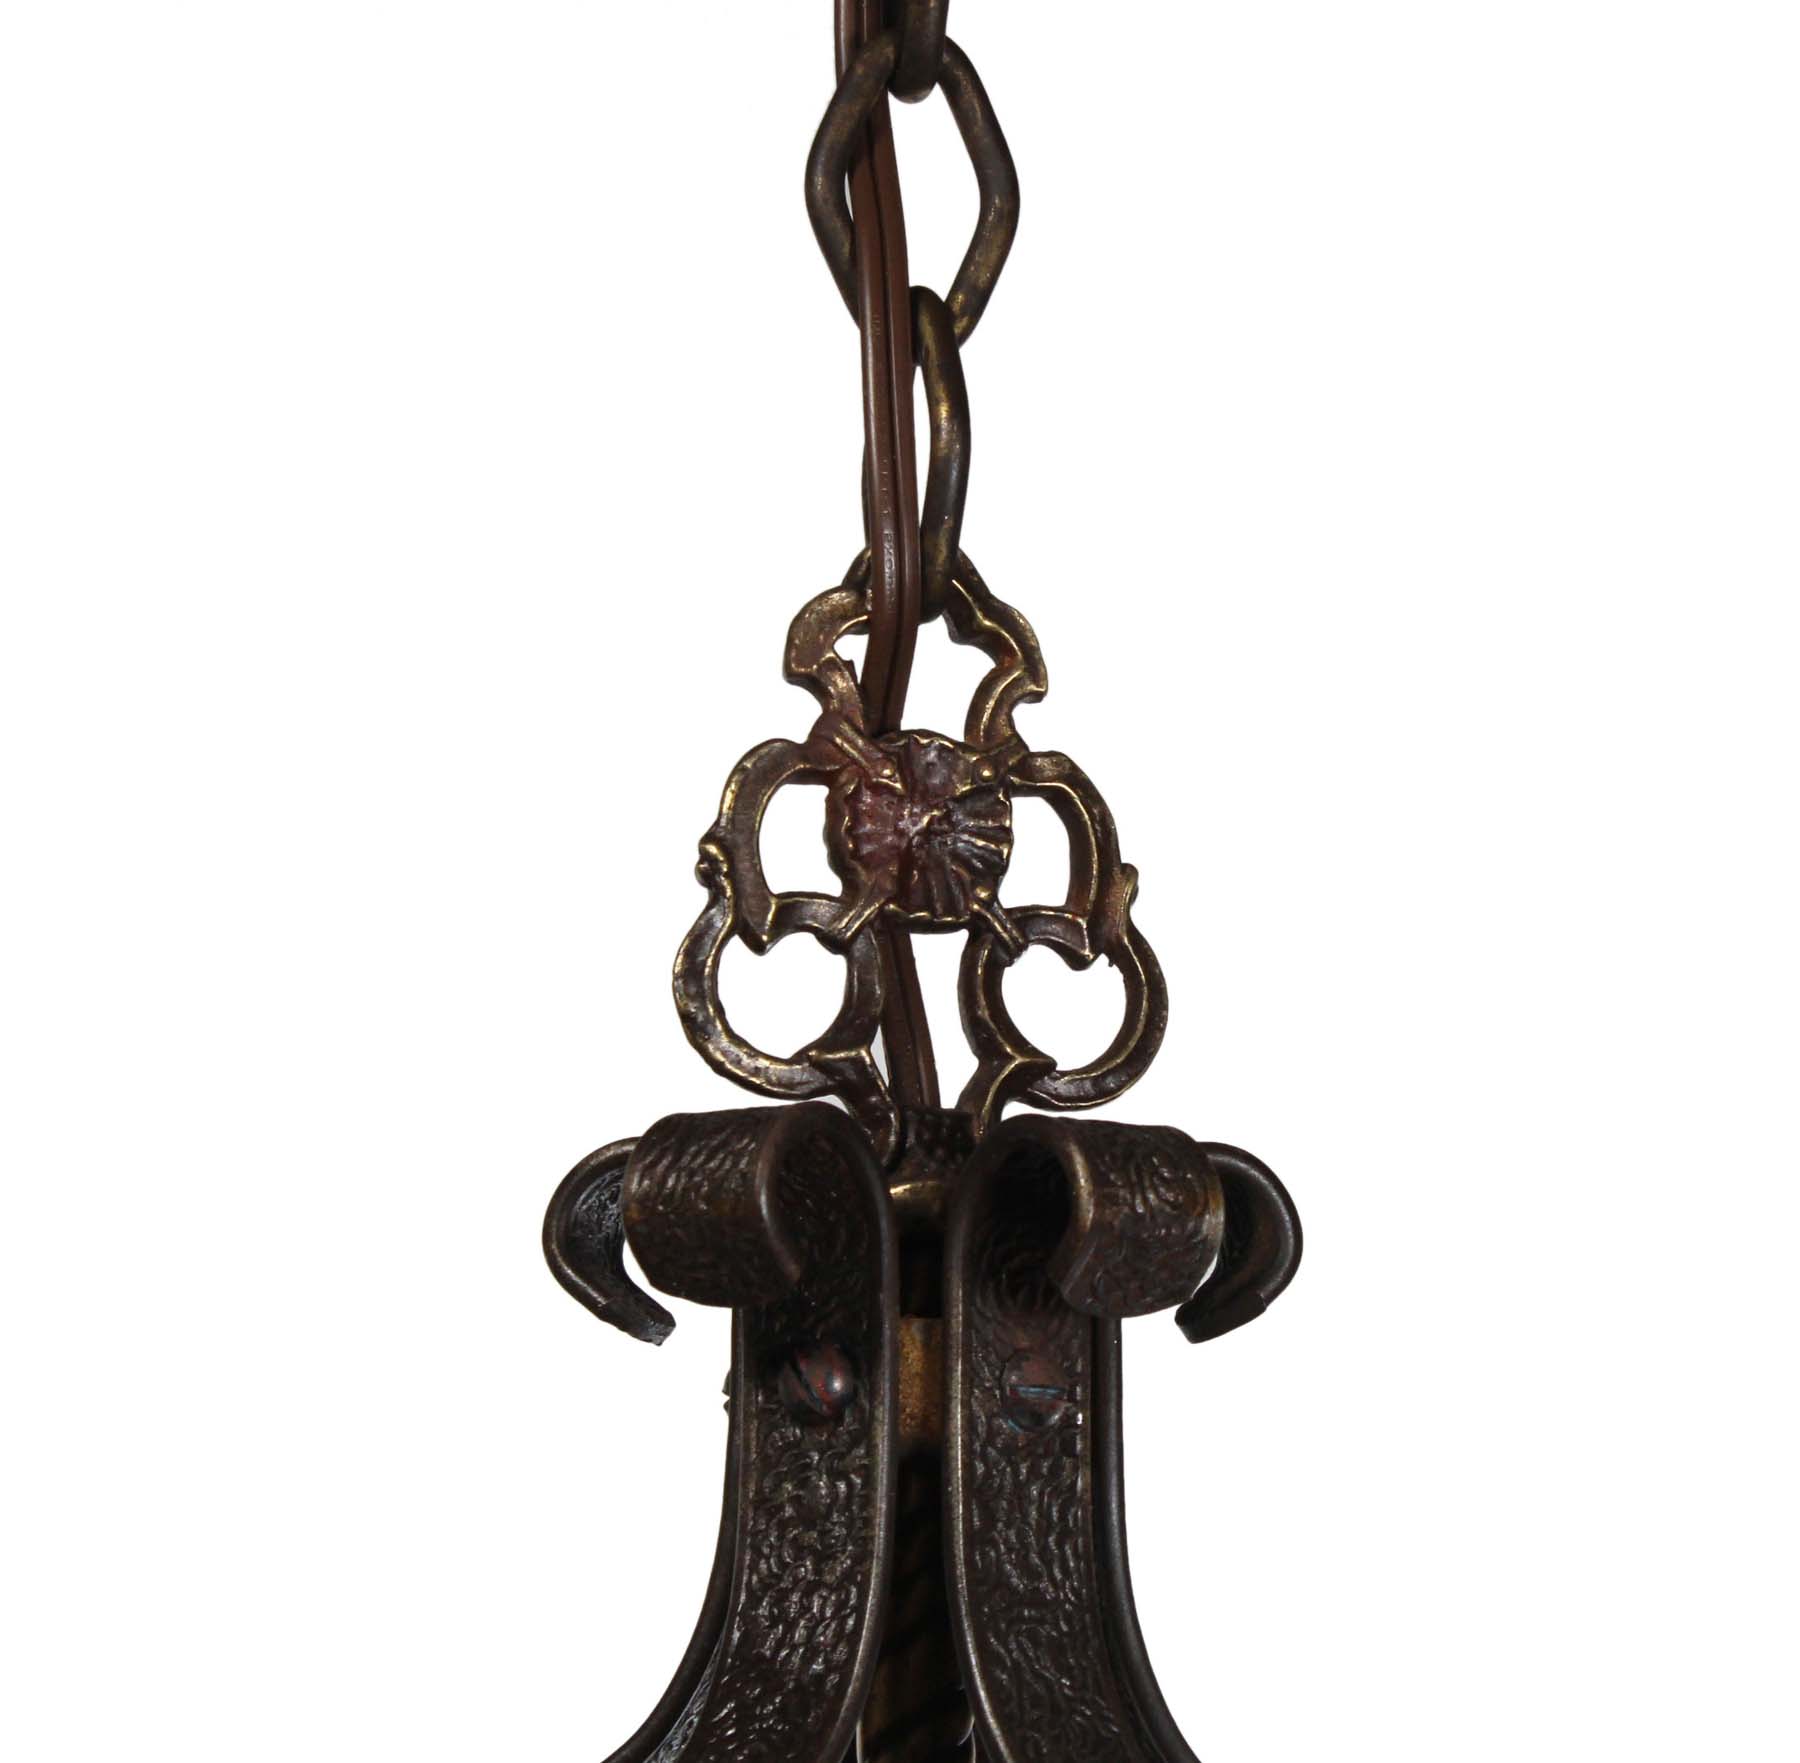 SOLD Spanish Revival Chandelier, Antique Lighting-68298